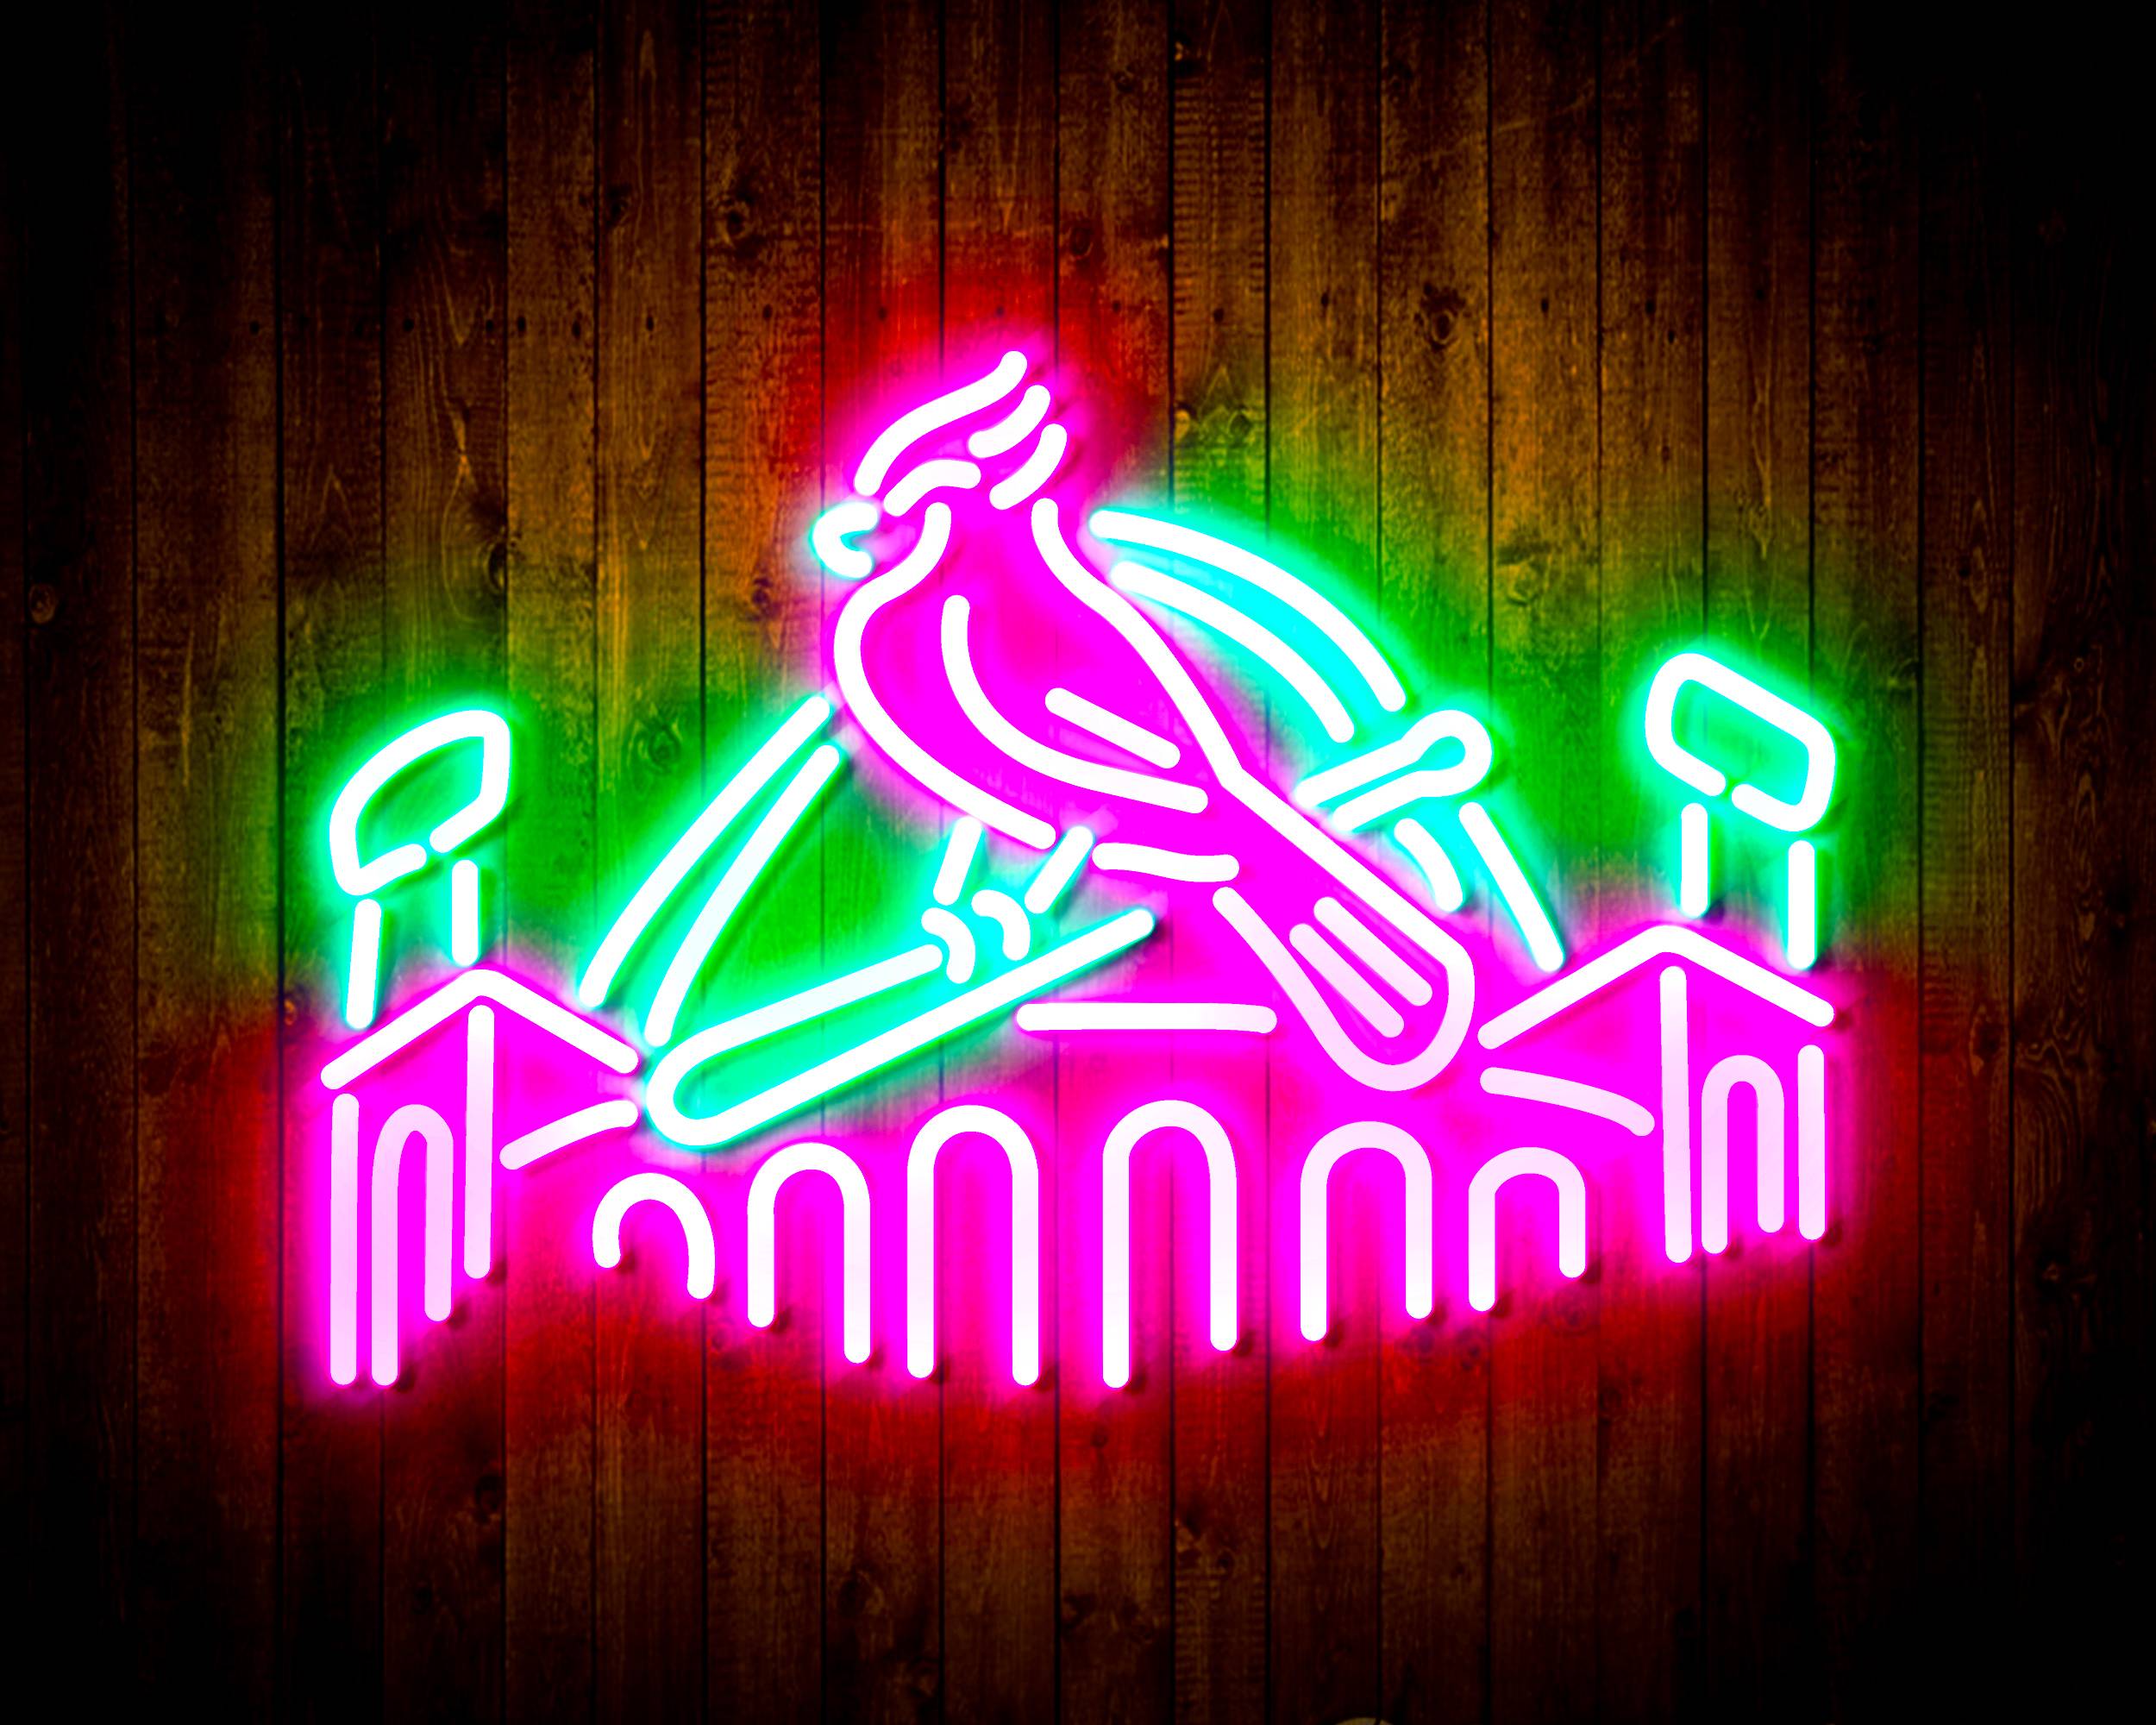 Budweiser with Cardinal Handmade LED Neon Light Sign